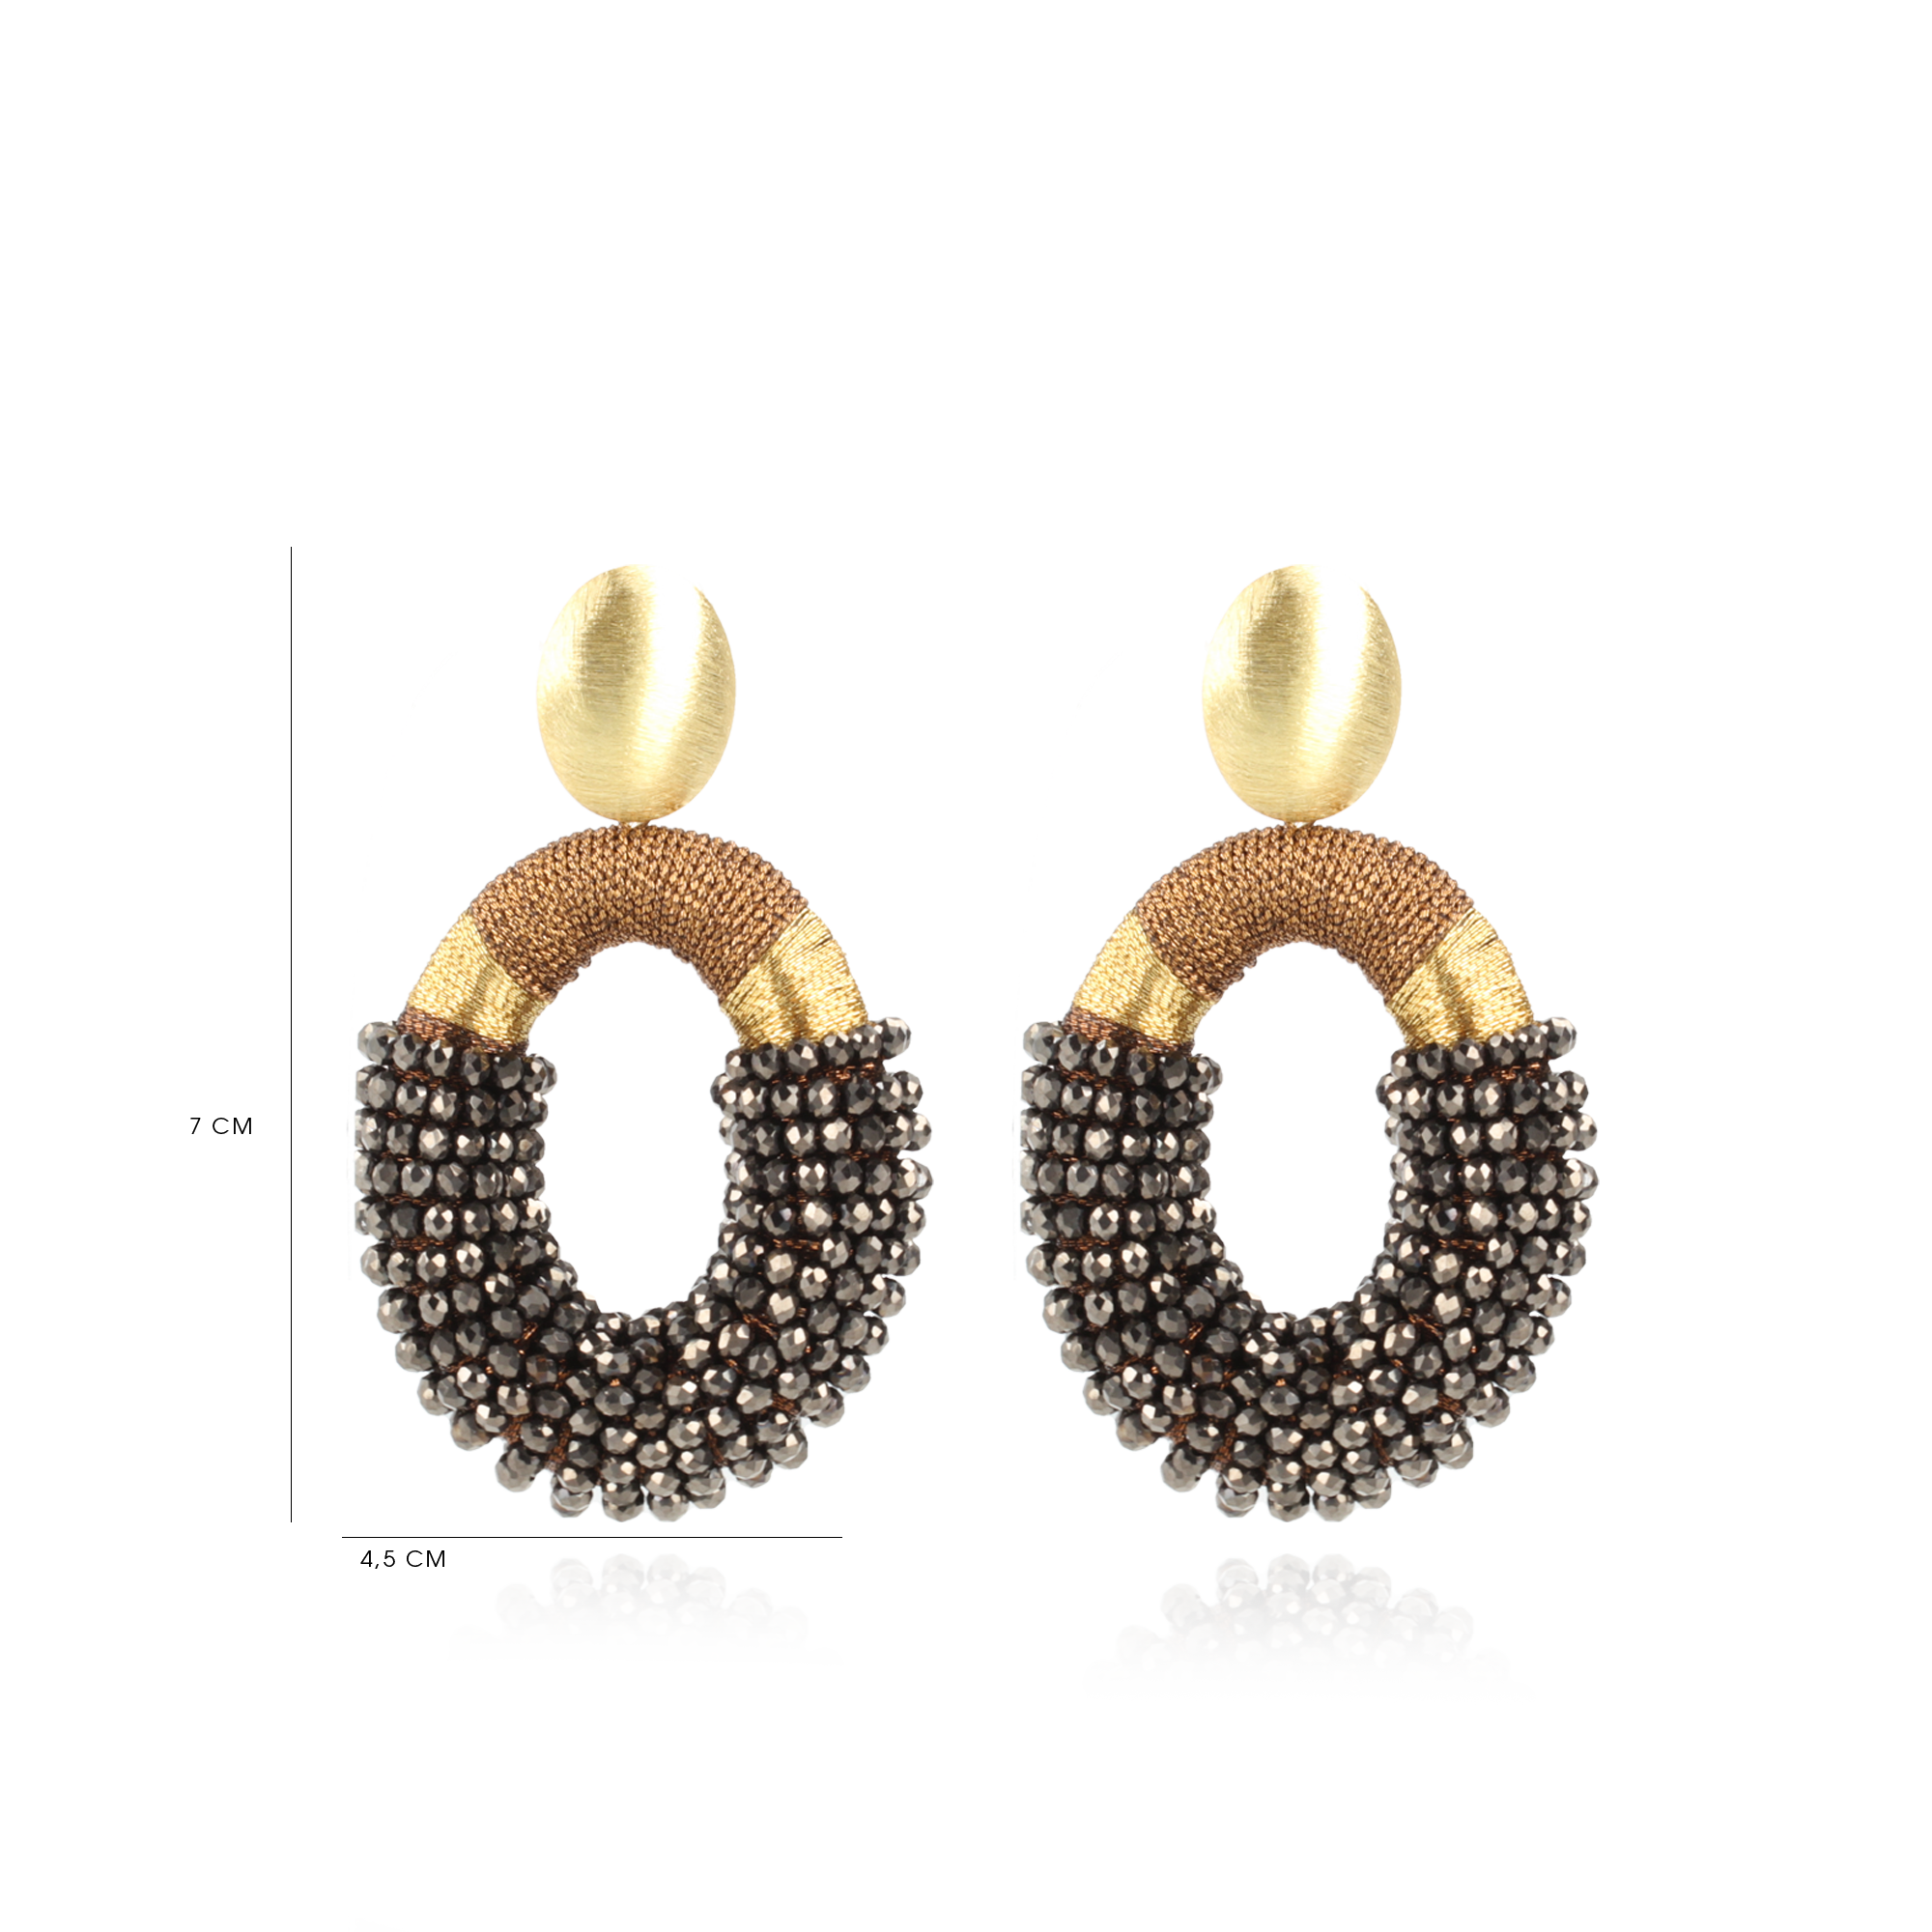 Metallic Brown Earrings Combi Oval L lott-theme.productDescriptionPage.SEO.byTheBrand